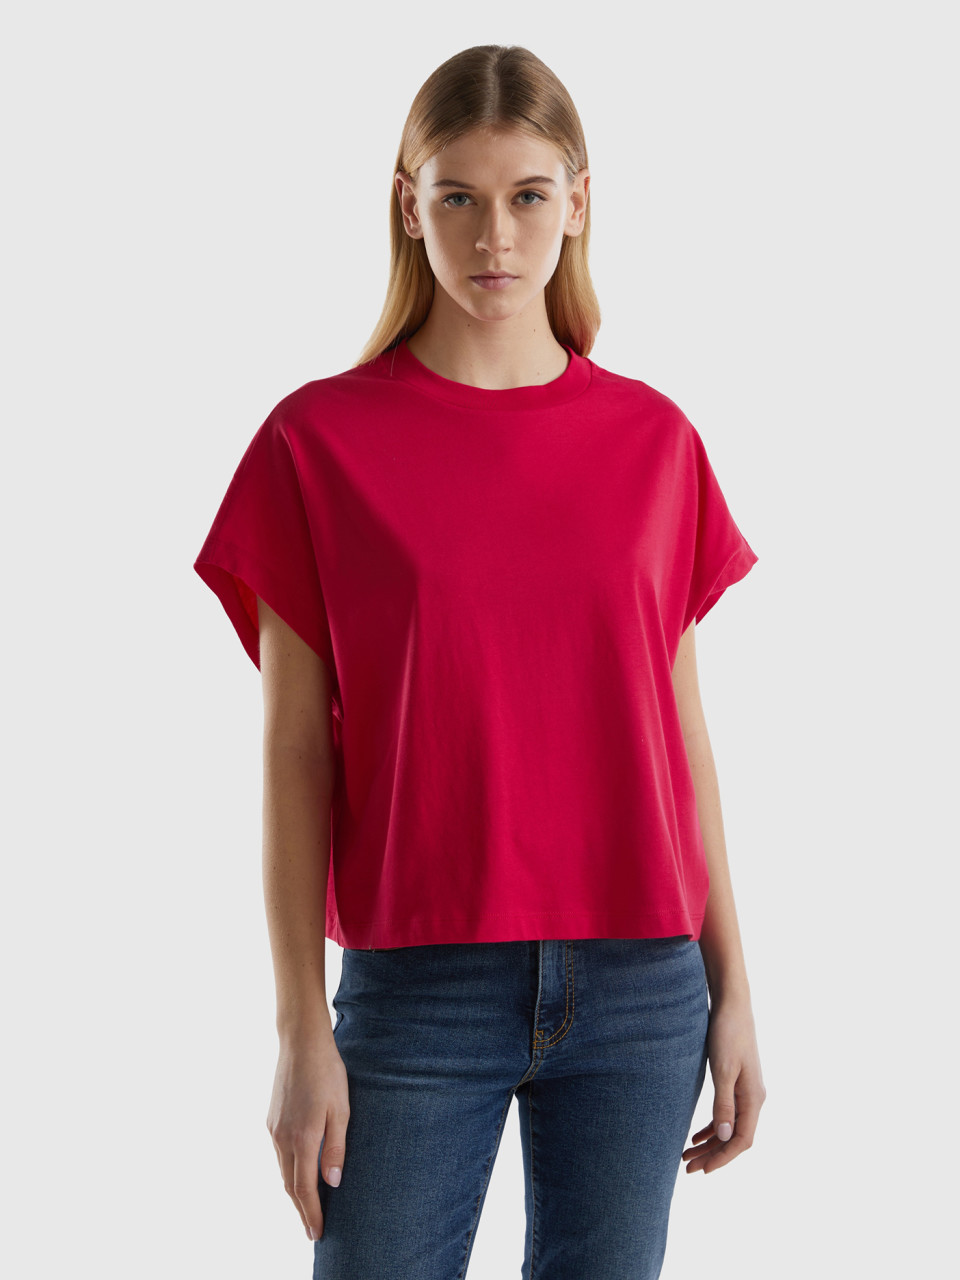 Benetton, Kimono Sleeve T-shirt, Fuchsia, Women